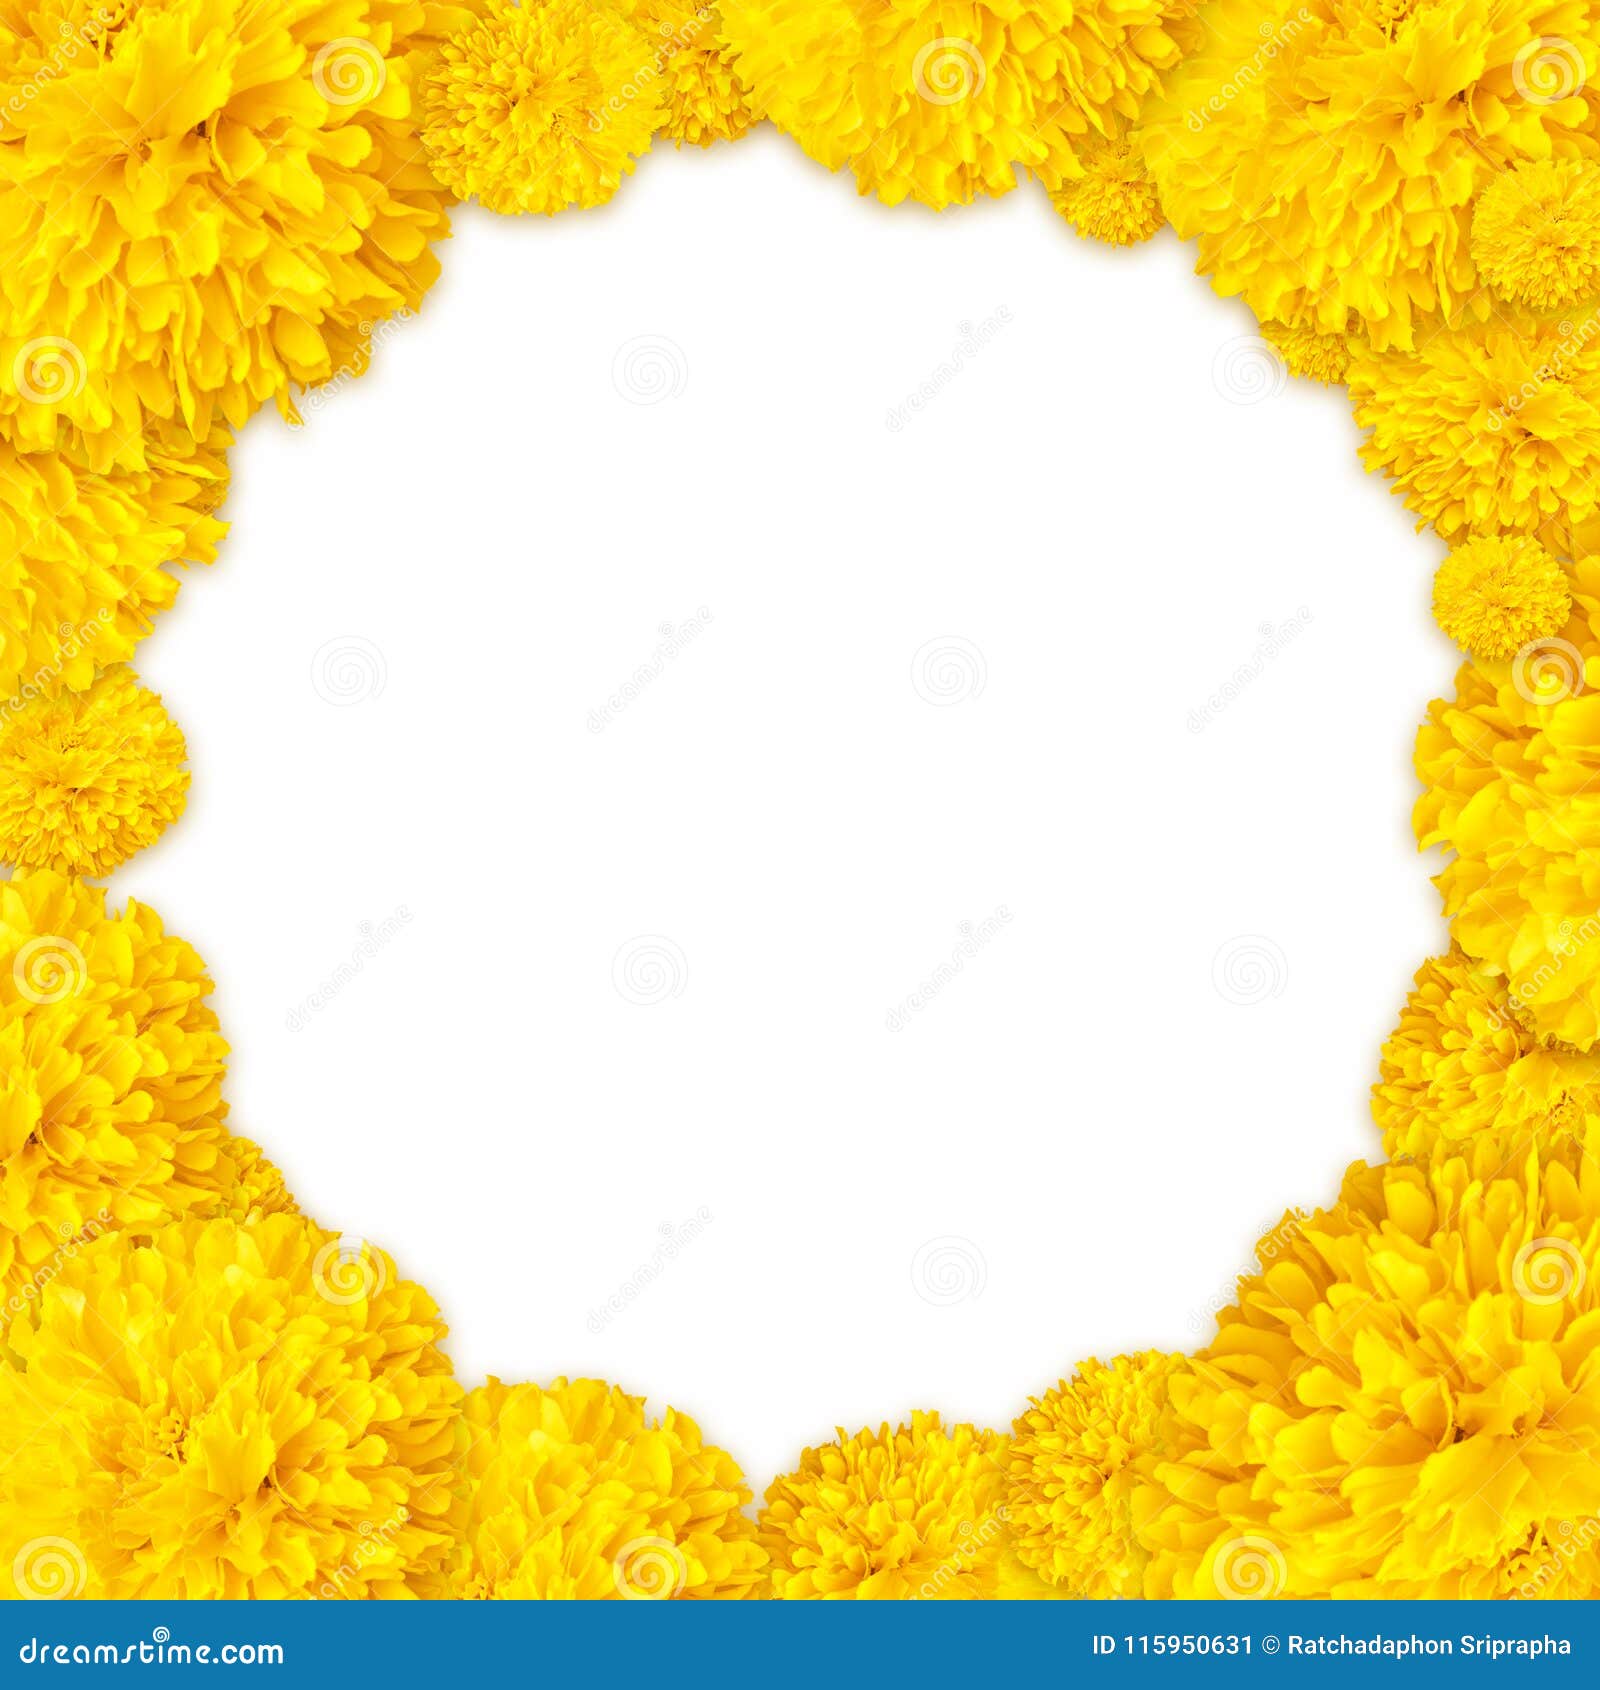 Marigold Flowers Stack As Frame Background Stock Image - Image of  createpattern, border: 115950631